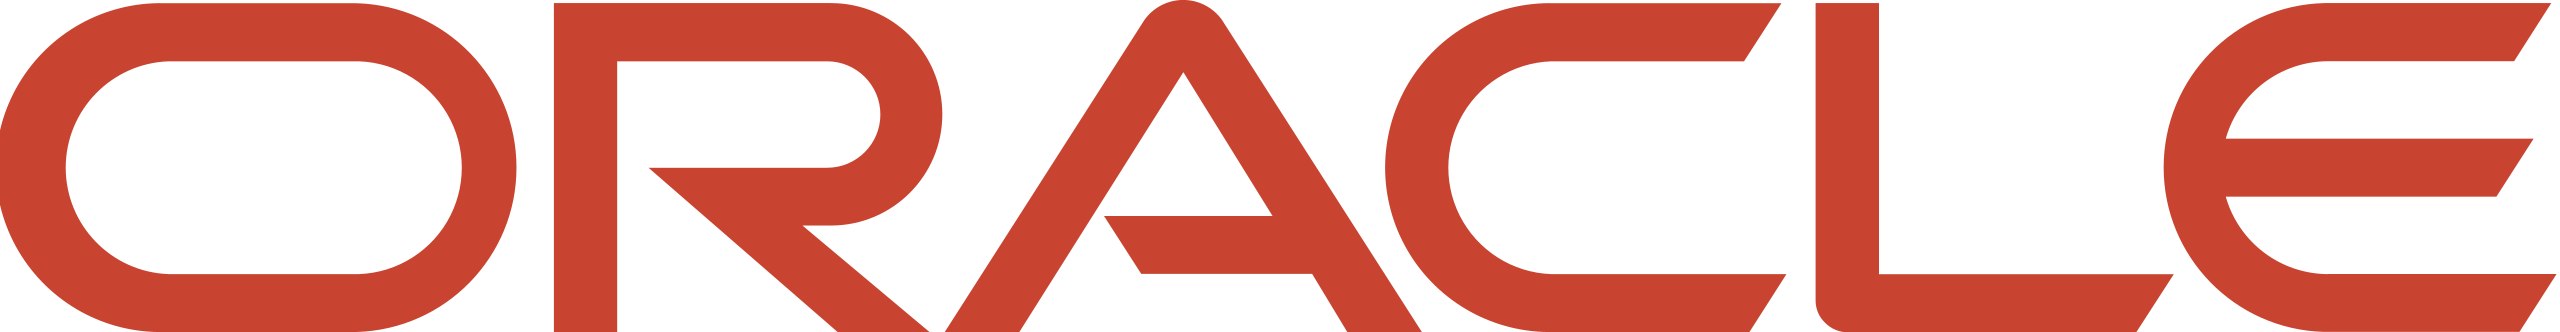 Oracle’s logo